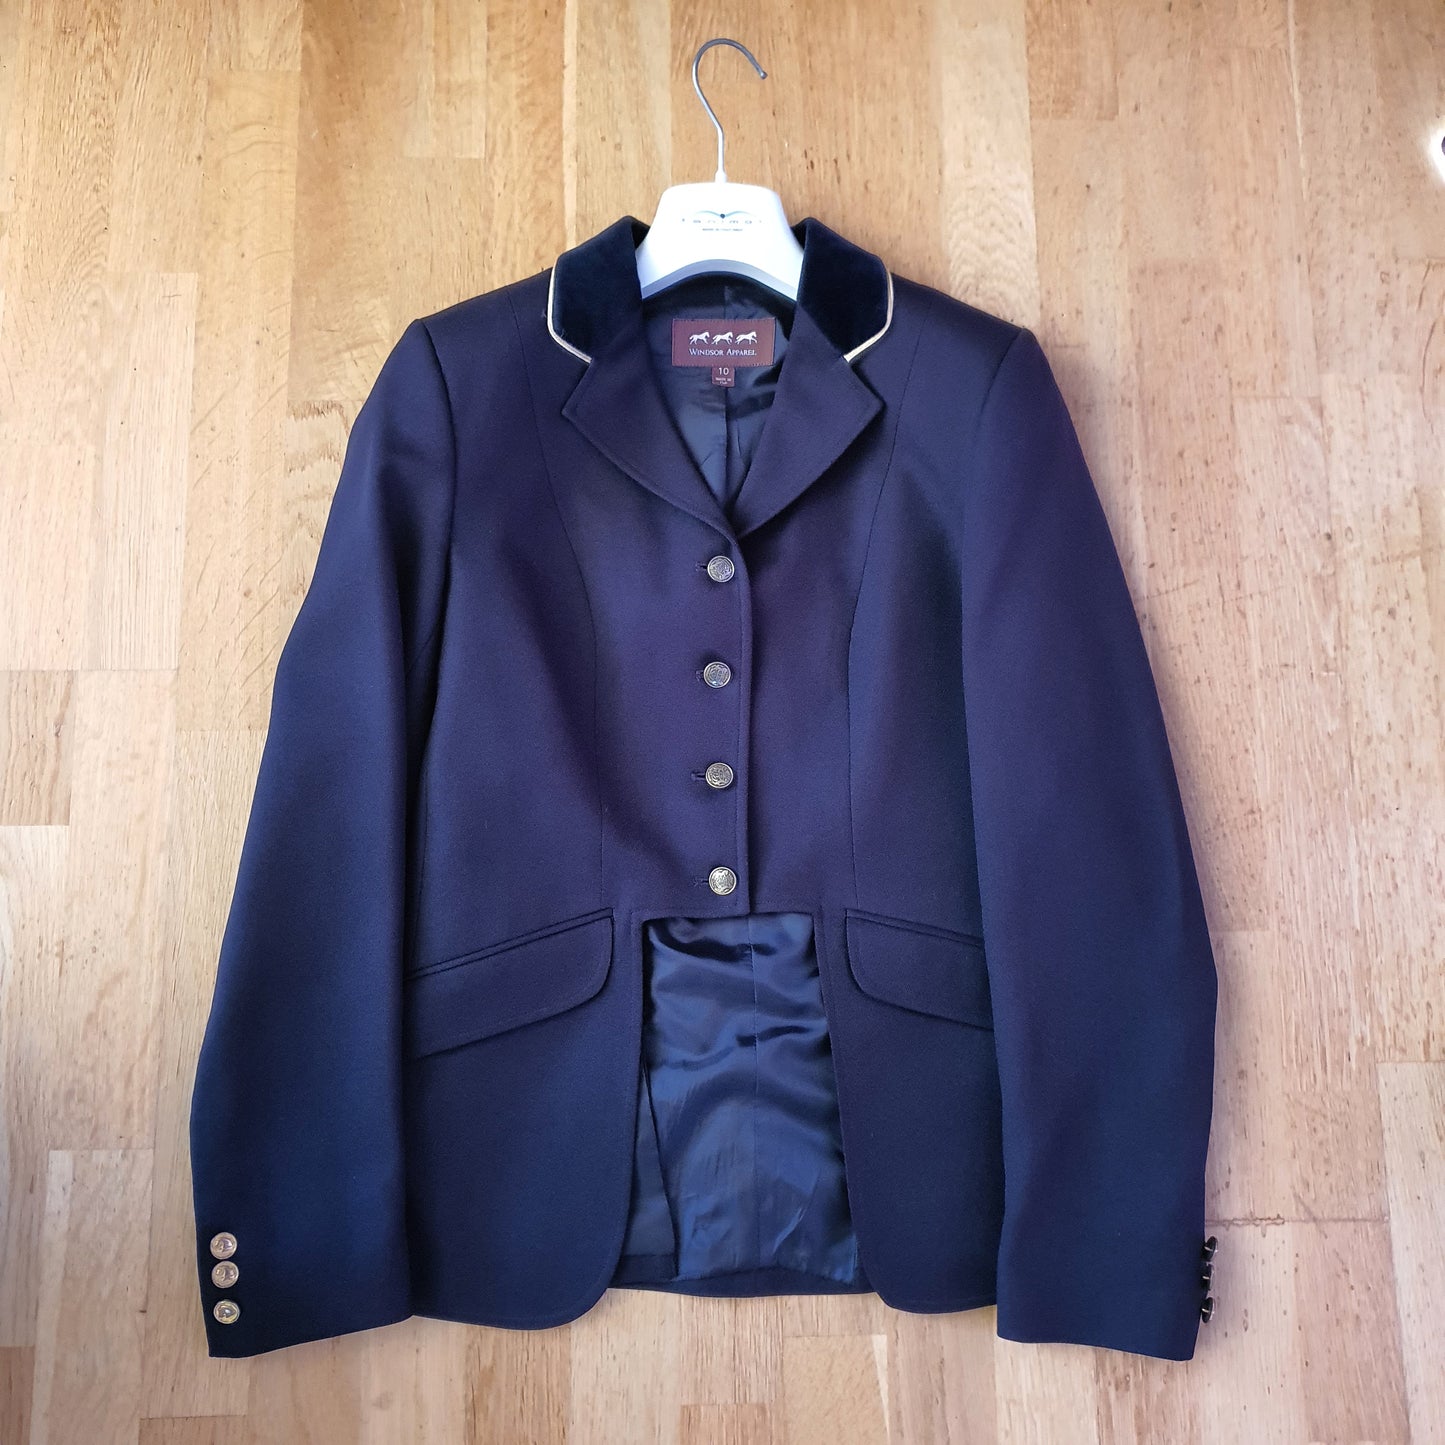 Windsor Apparel navy cutaway show jacket ladies size 10